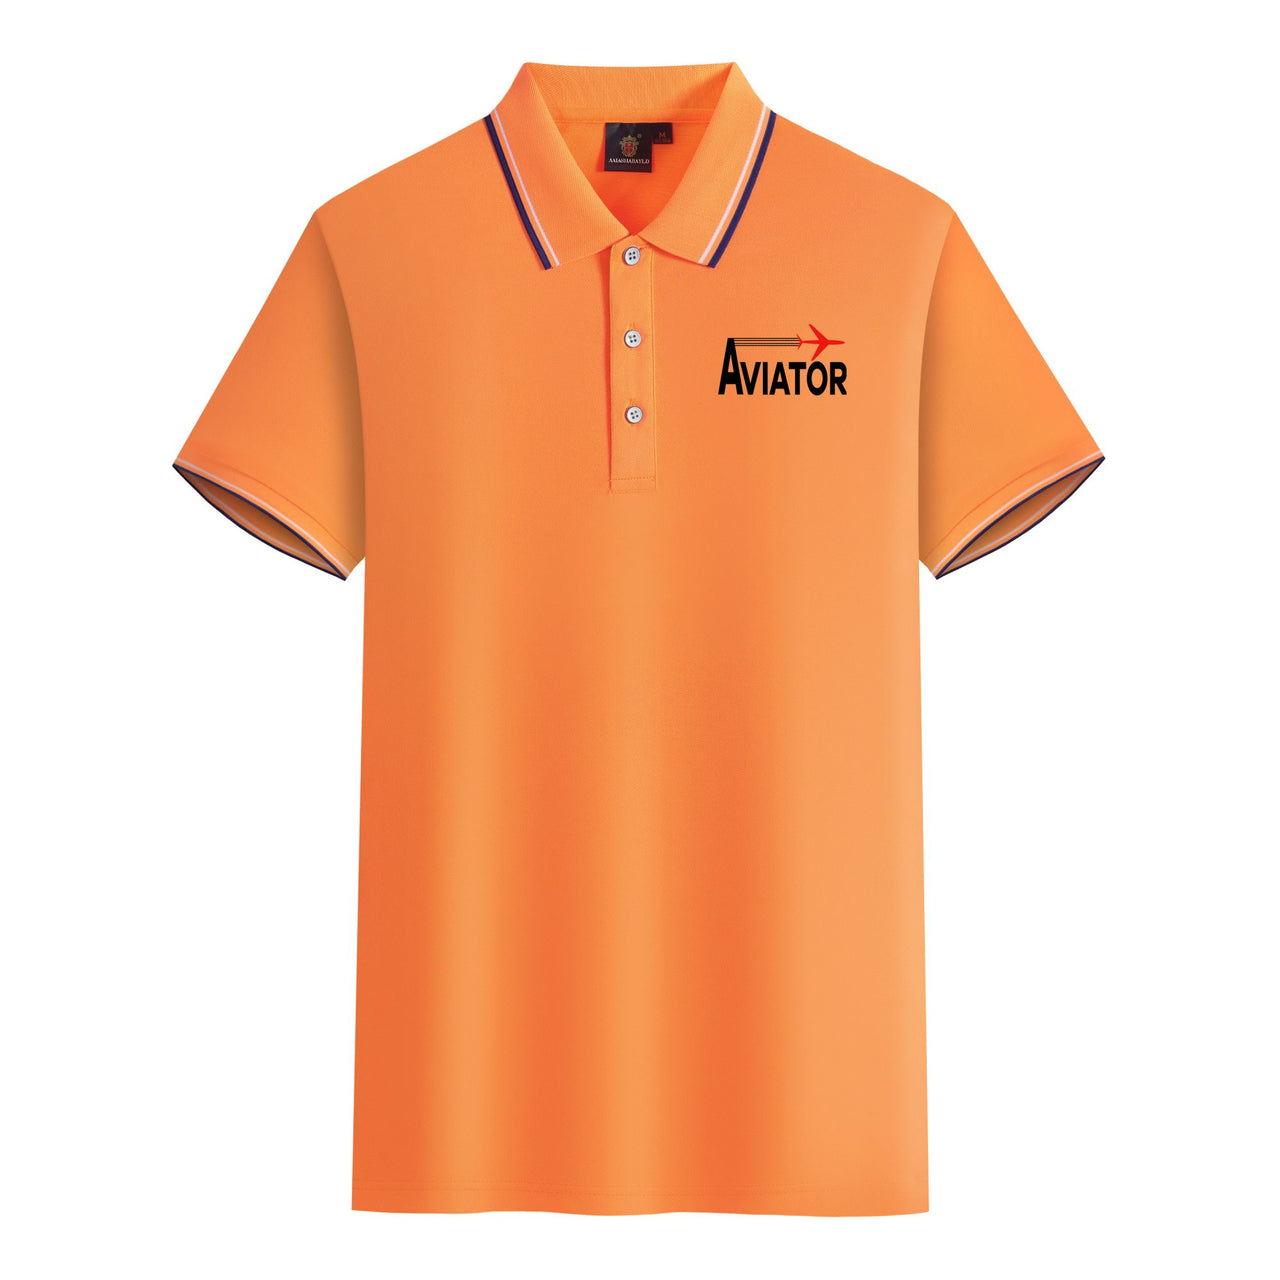 Aviator Designed Stylish Polo T-Shirts